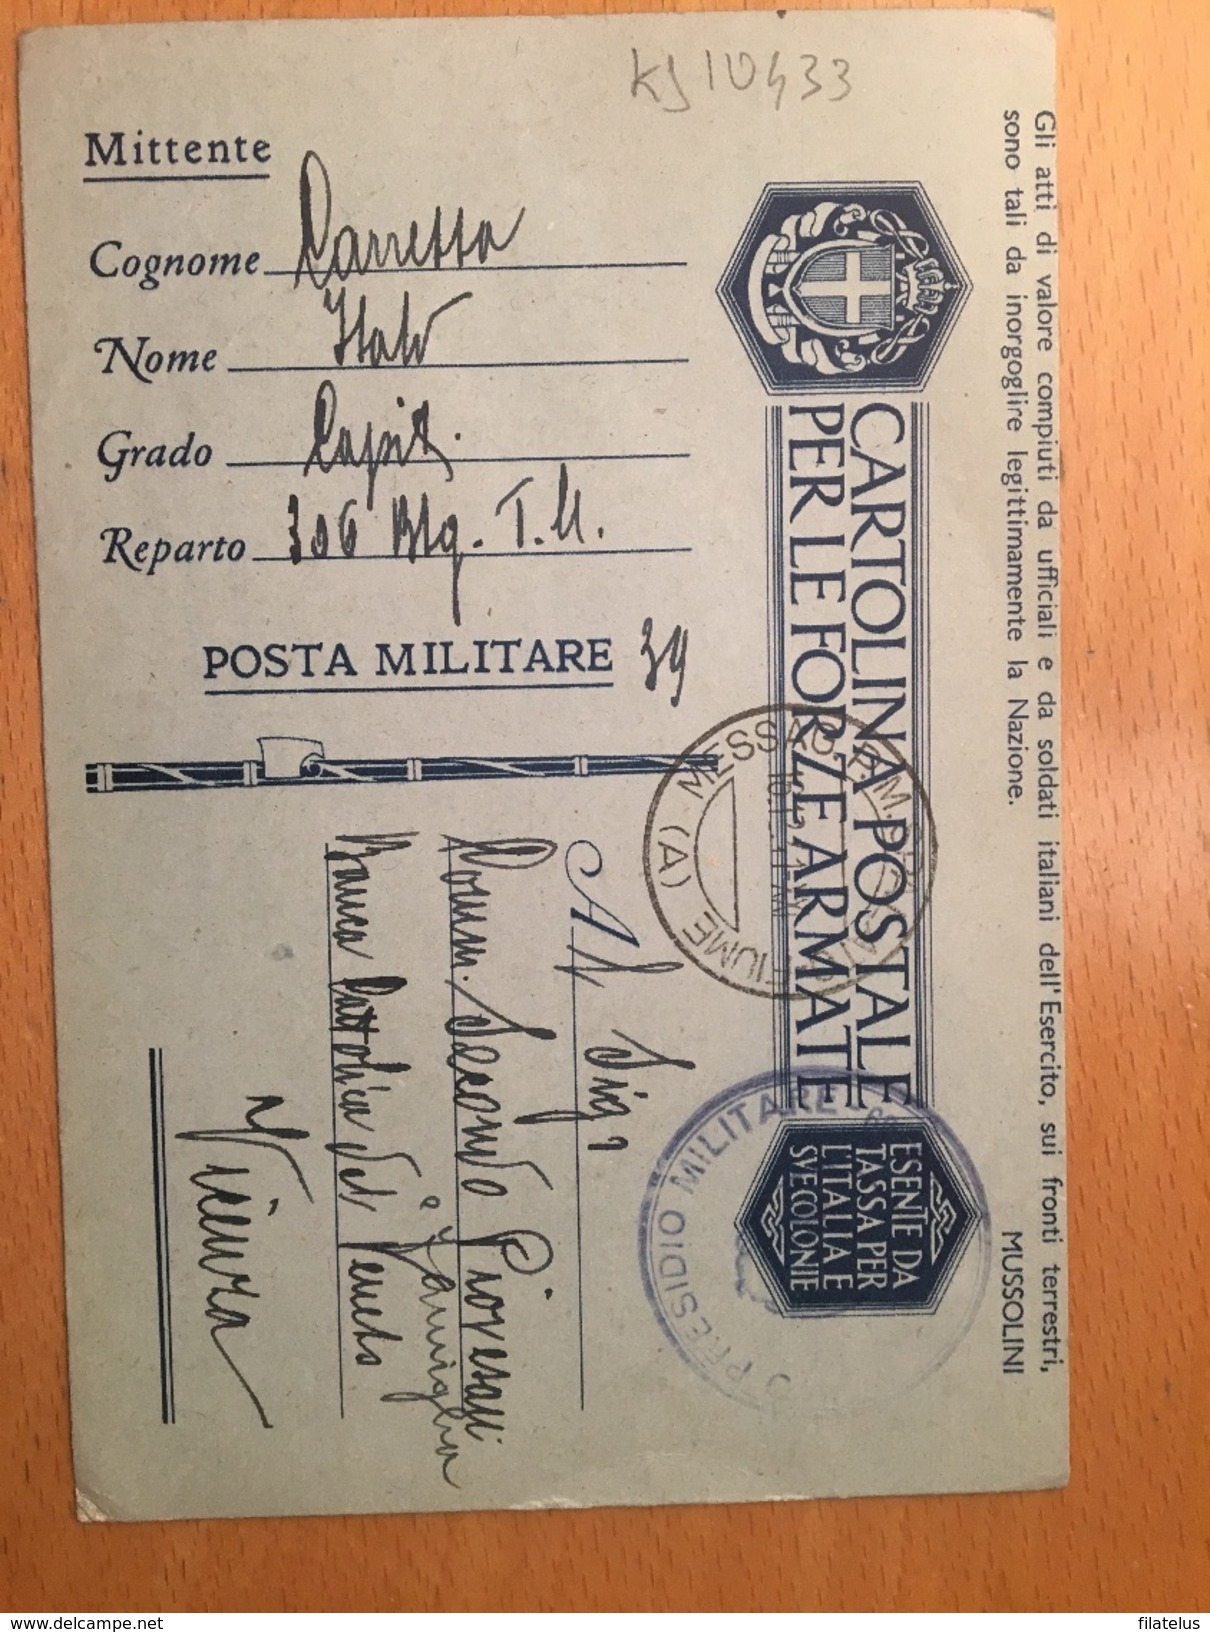 CARTOLINA POSTALE X LE FORZE ARMATE-306 BTG. T.U.POSTA MILITARE 39-FRASE DI MUSSOLINI - Posta Militare (PM)